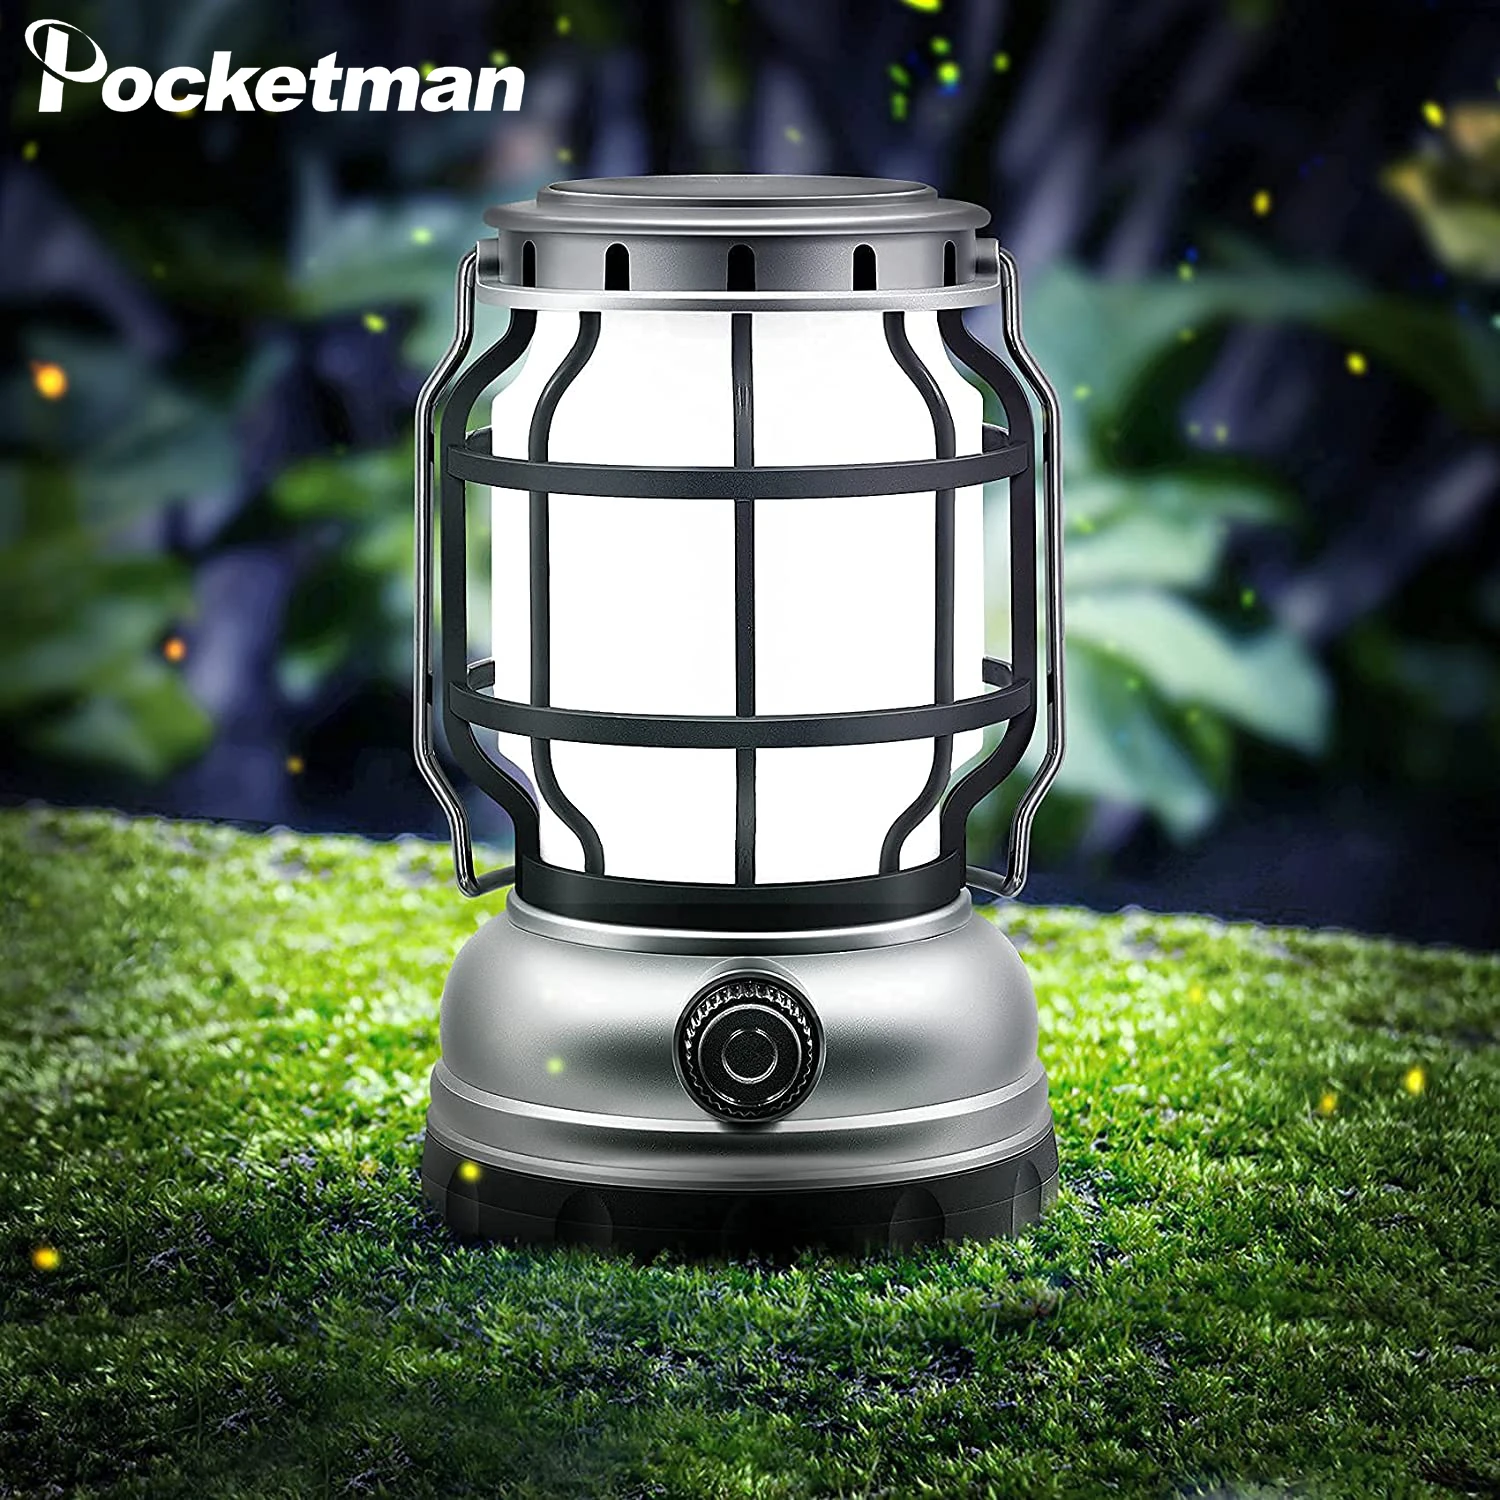 https://ae01.alicdn.com/kf/S11f2b6bf7f6e4ddb9c38f0115174ec3bY/Solar-Lantern-Waterproof-Camping-Lantern-Rechargeable-Camping-Light-with-Emergency-Power-Bank-Flickering-Flame-Hanging-LED.jpg_Q90.jpg_.webp